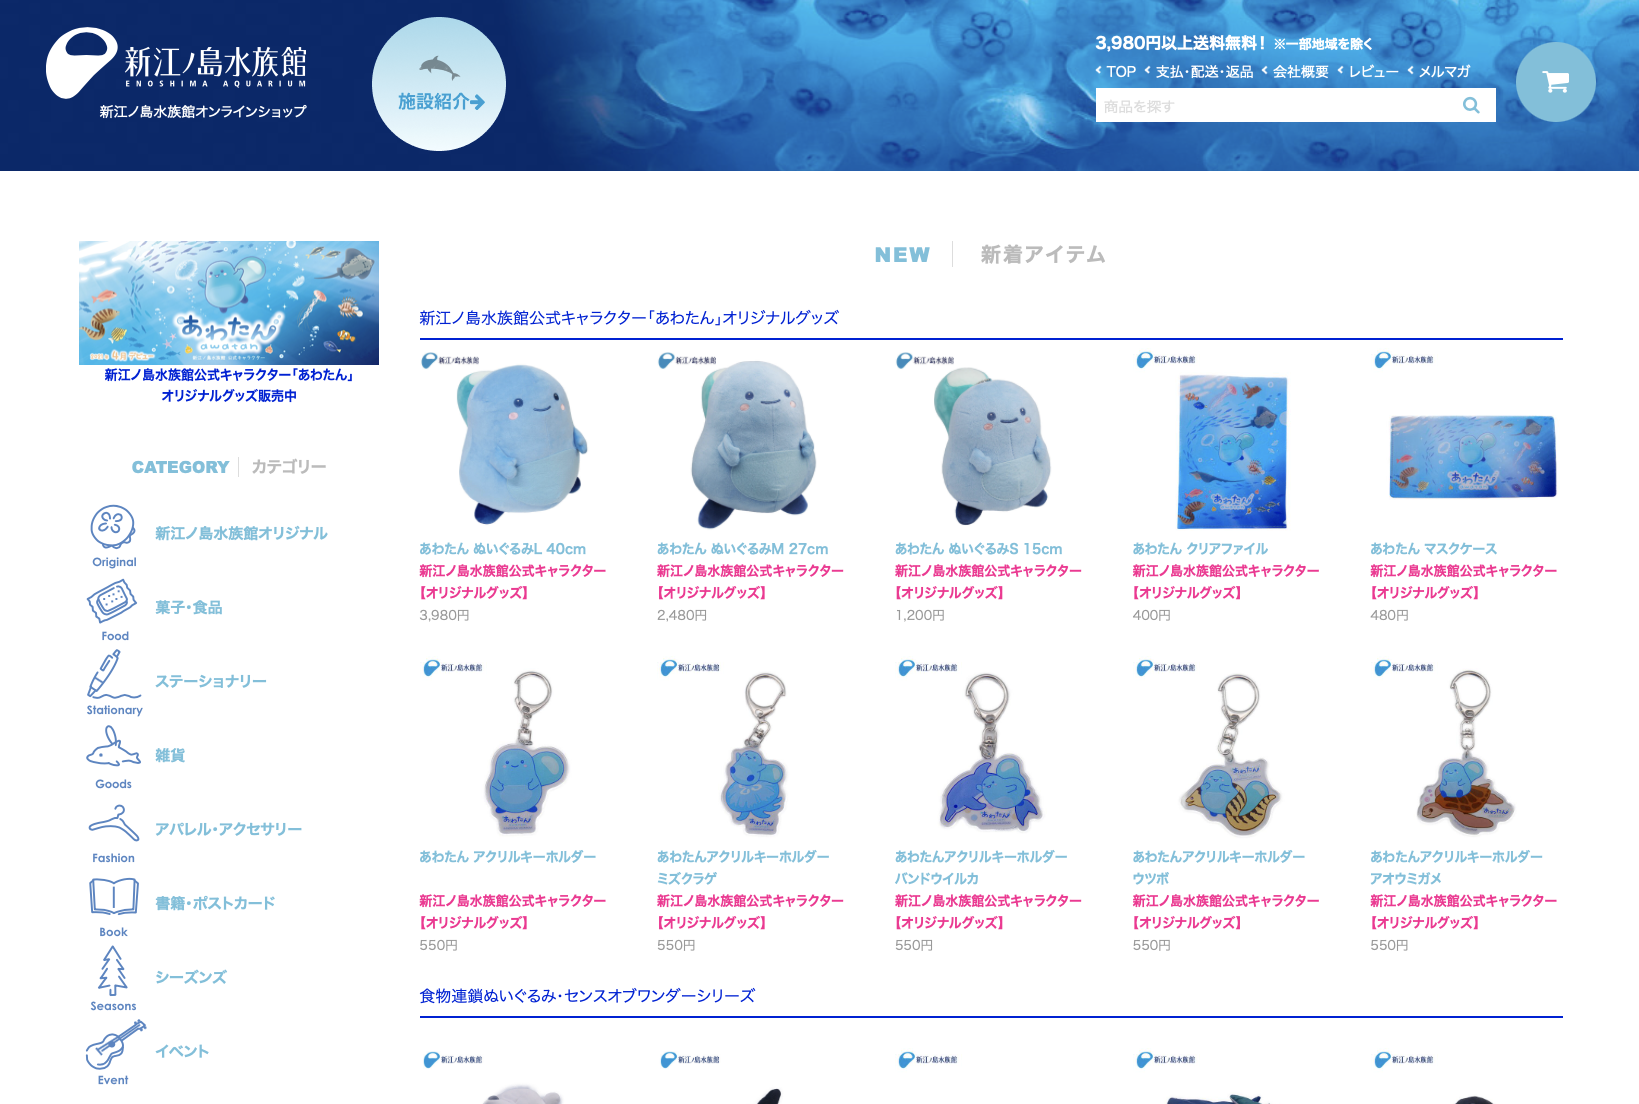 enoshima-aquarium-onlineshop-popular-item